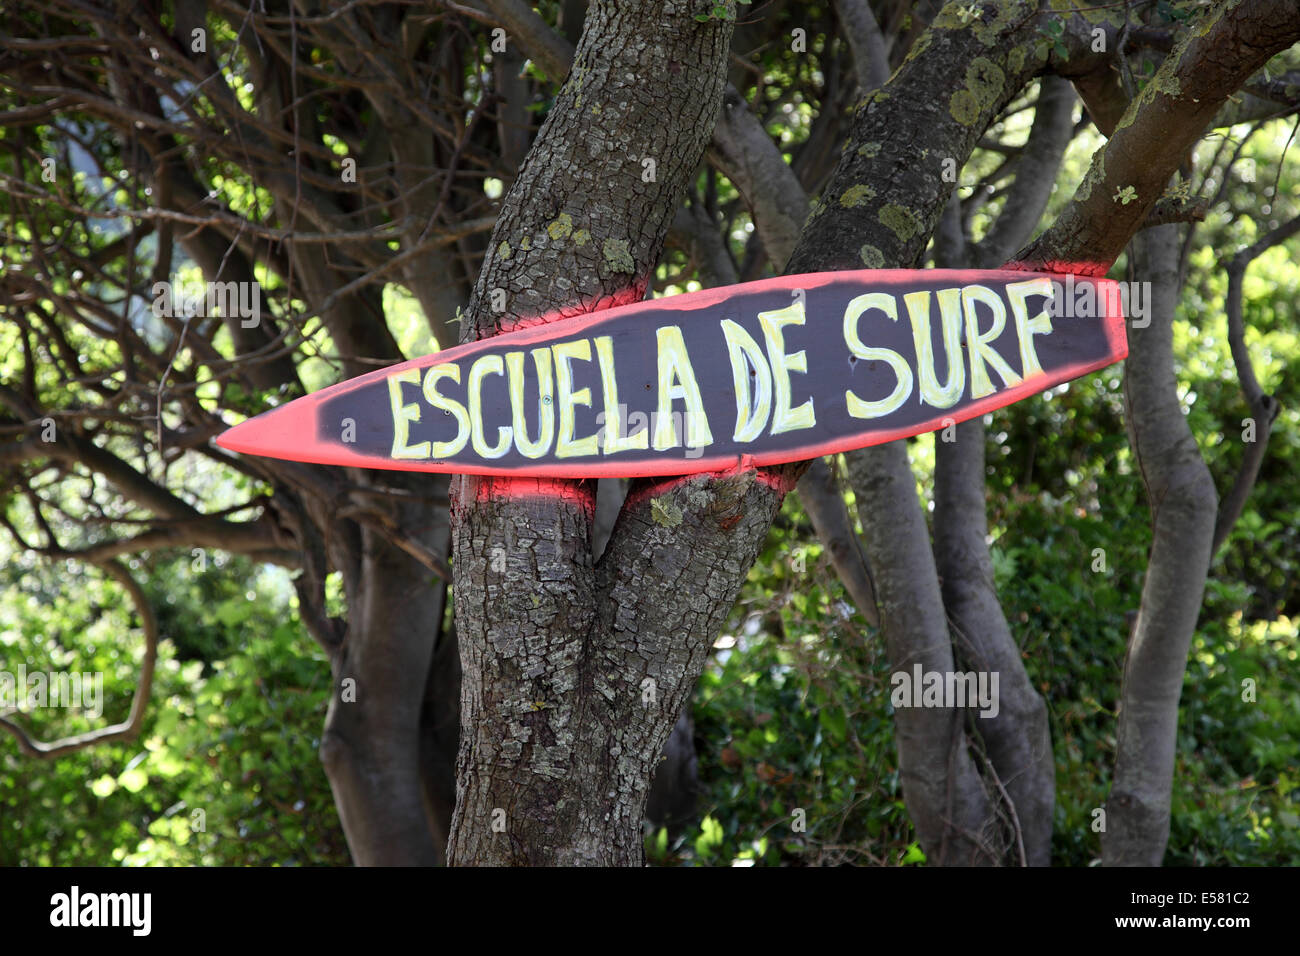 Escuela de surf - surfing school in spanish Stock Photo